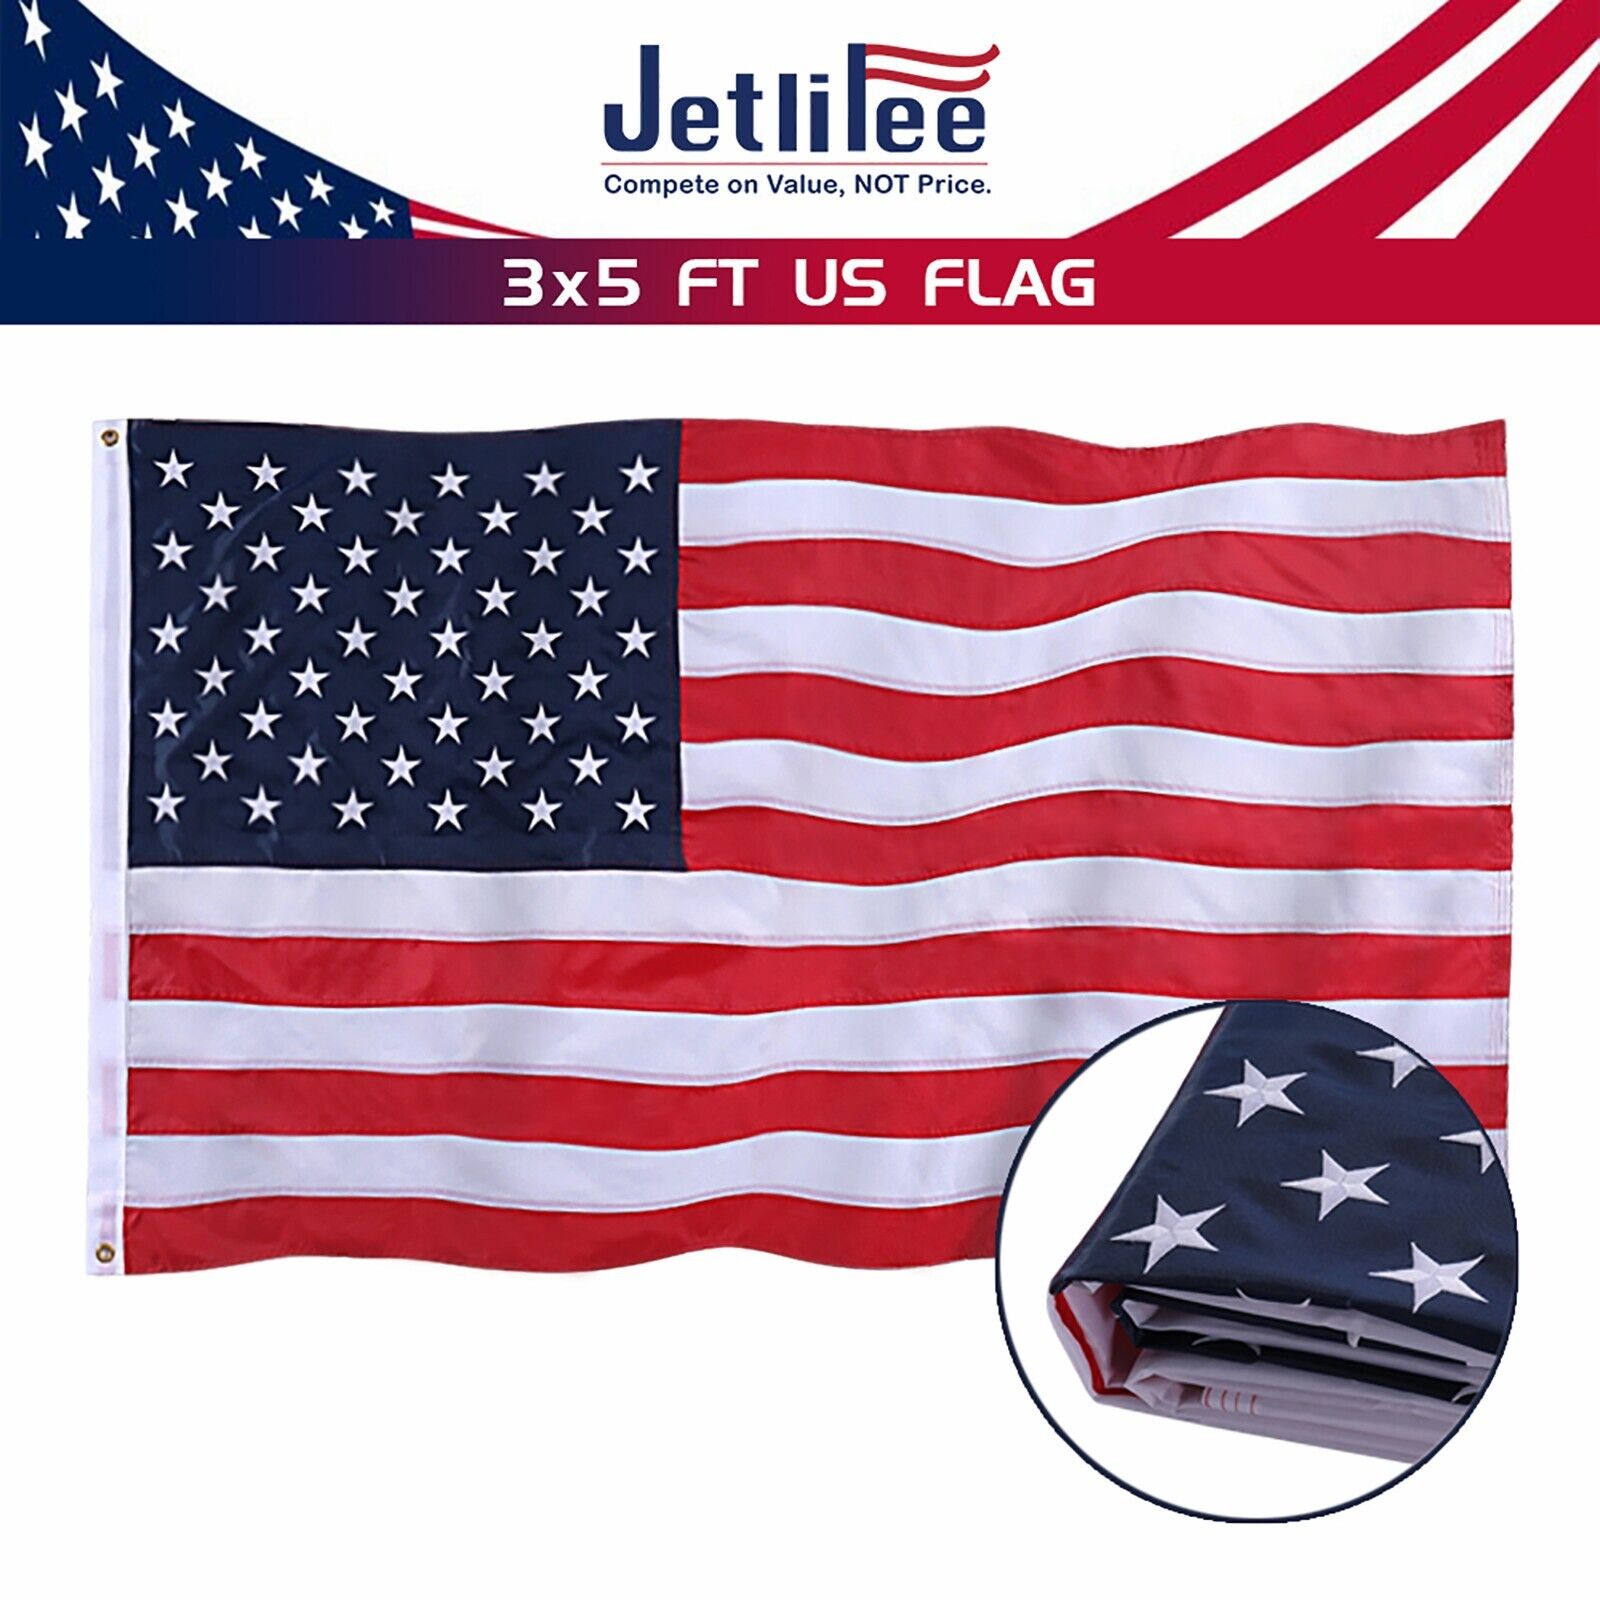 Jetlifee American Flag 3x5 ft US Flag UV Protected Embroidered Stars 210D Nylon